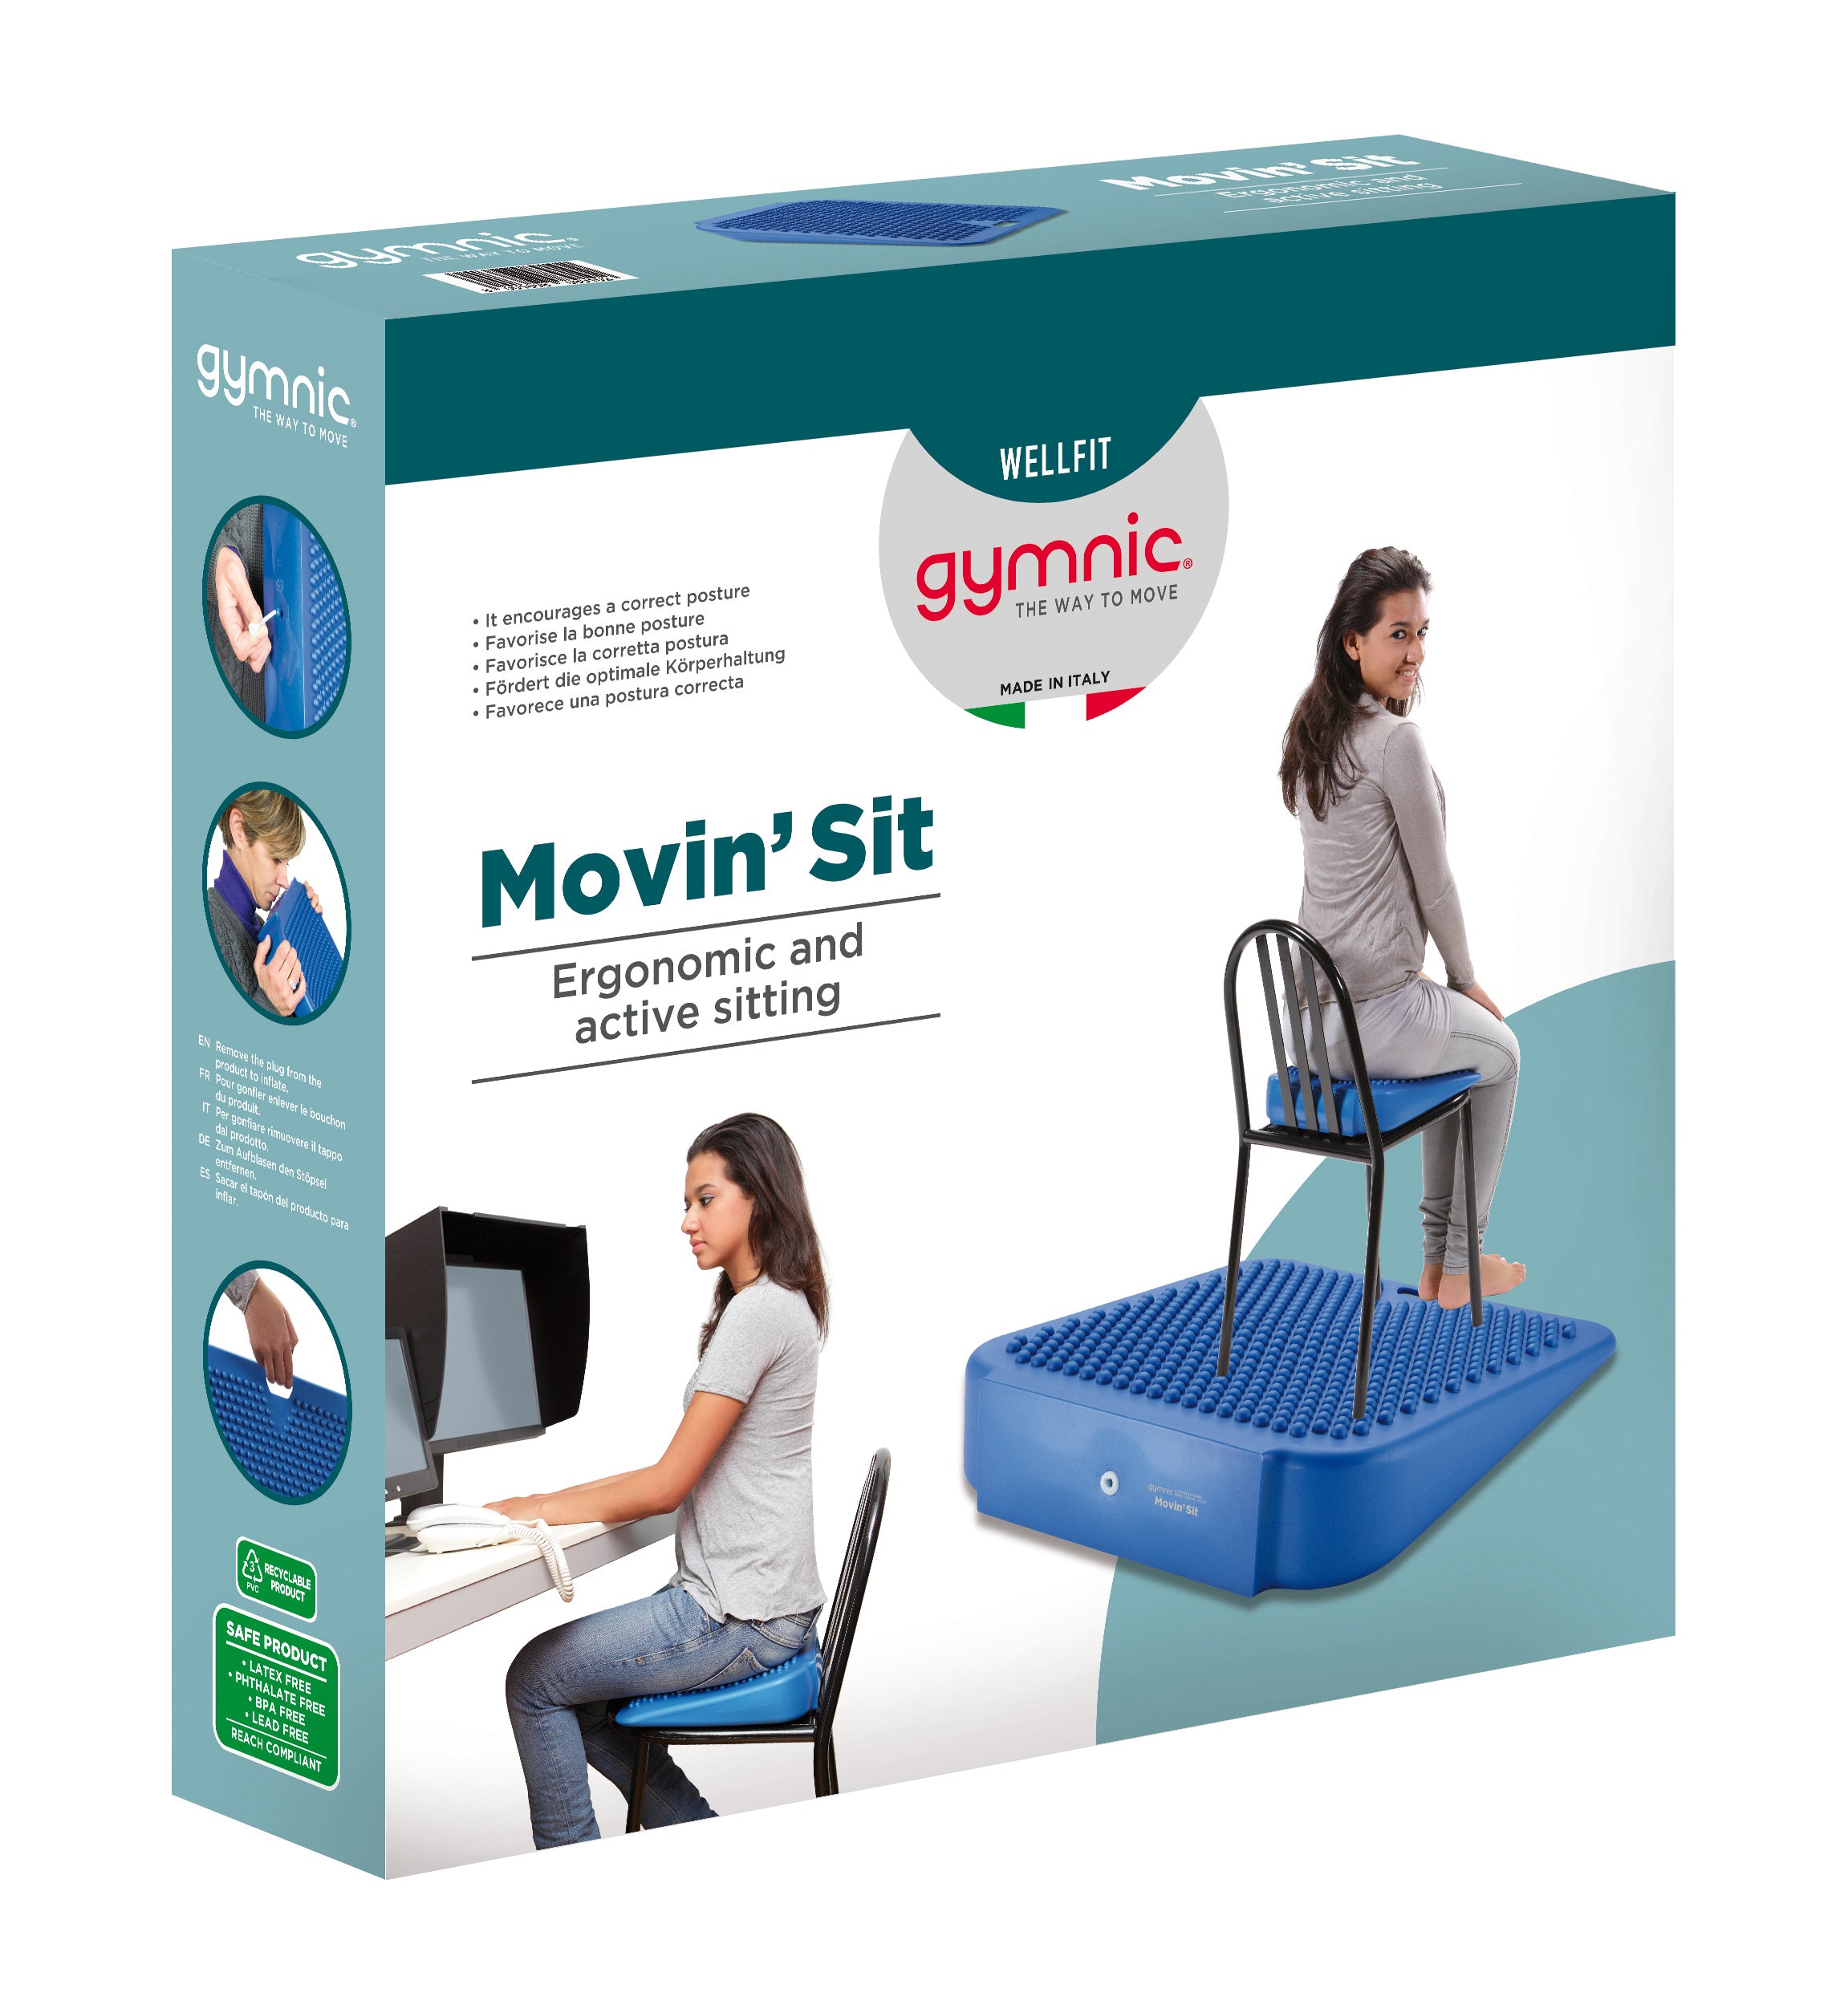 Gymnic Movin' Sit